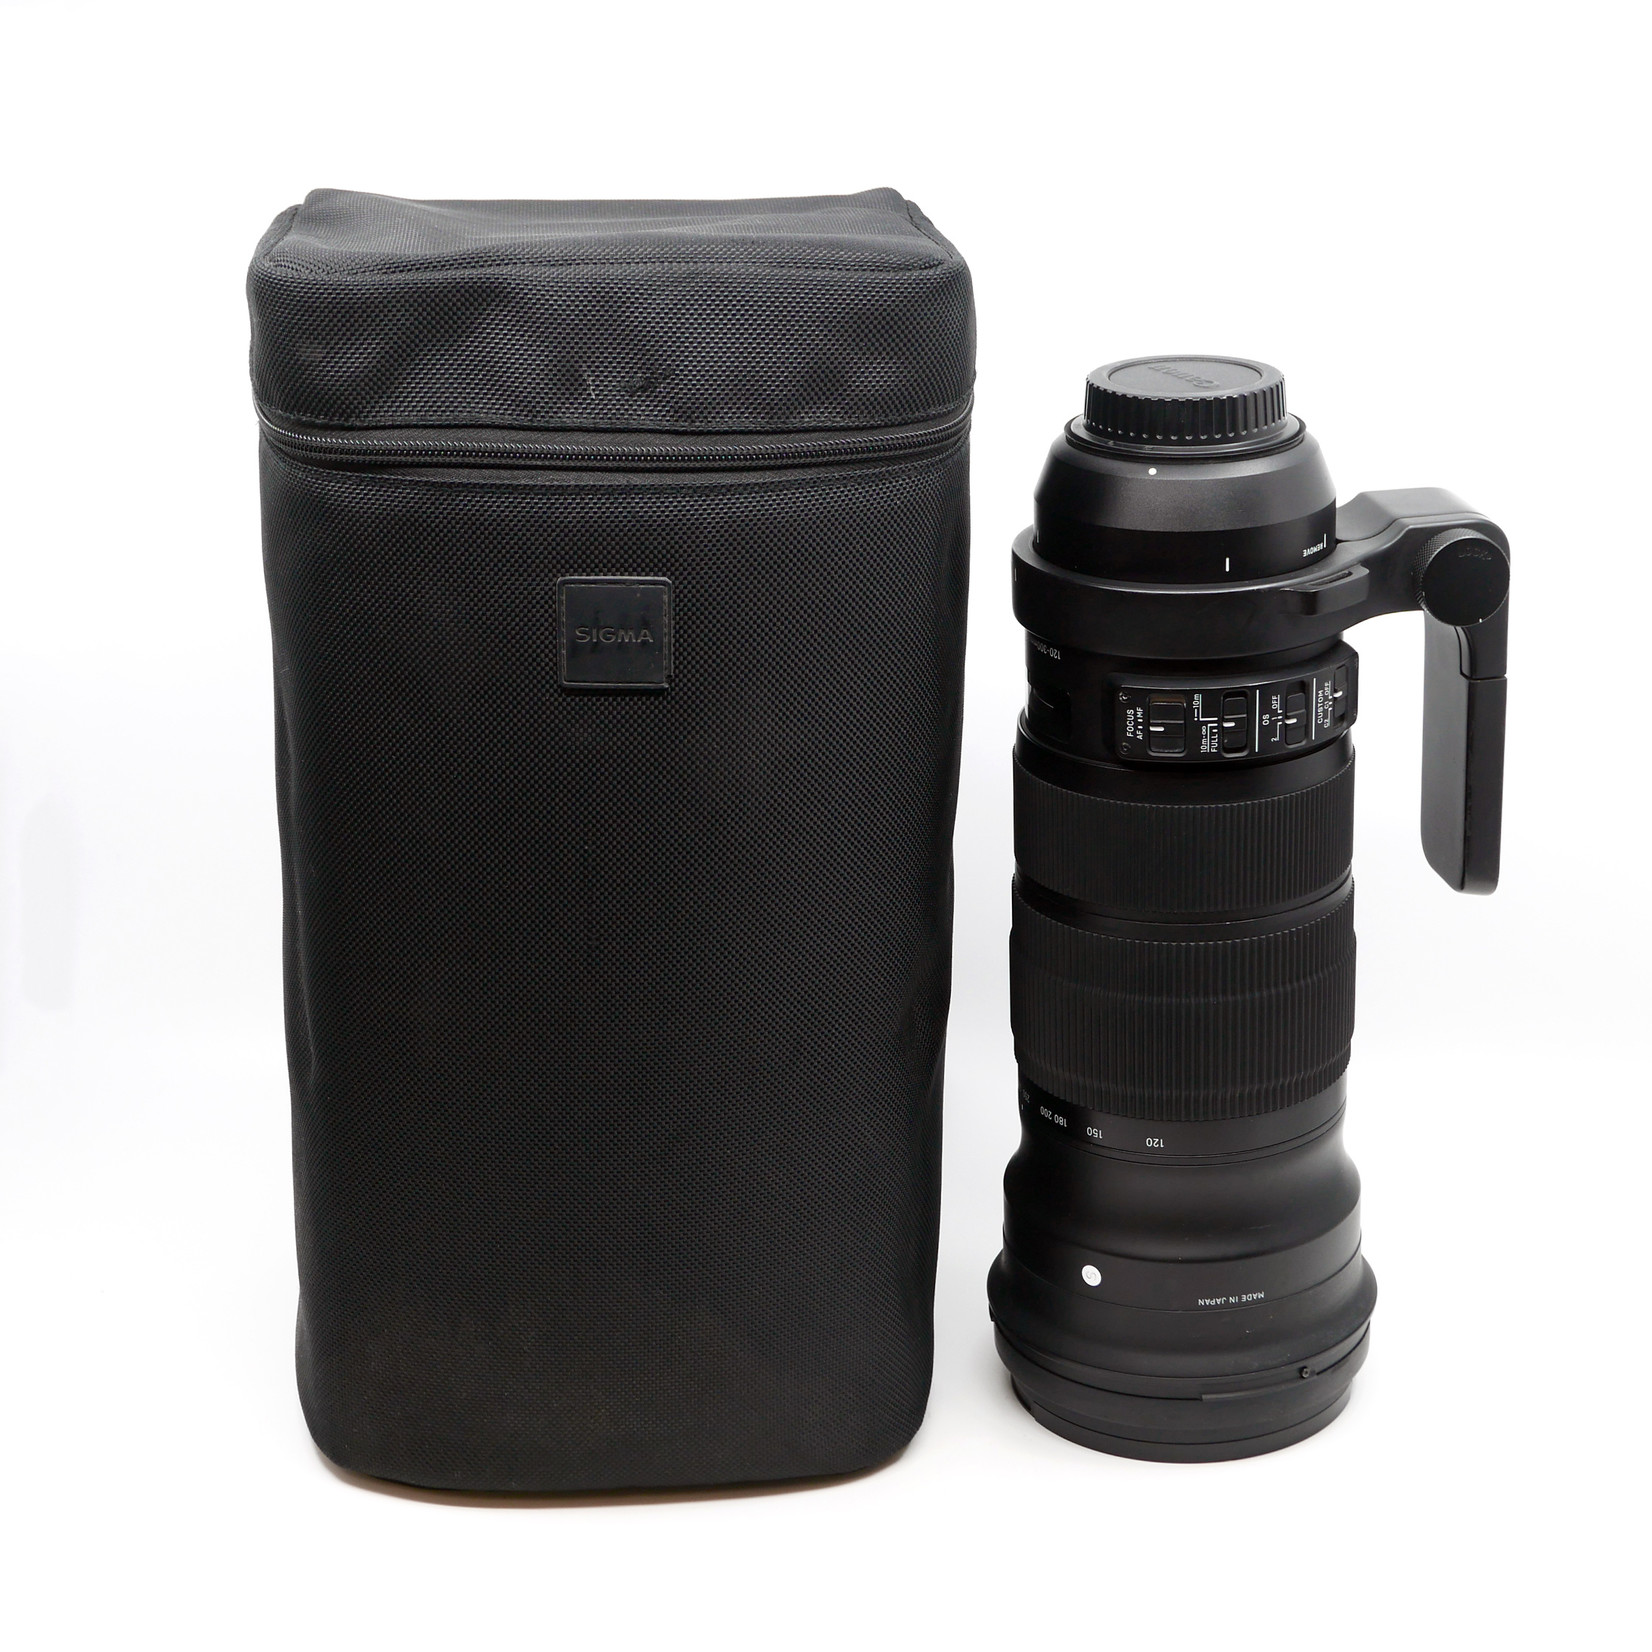 Sigma Sigma 120-300mm f:2.8 DG for Canon (Used)